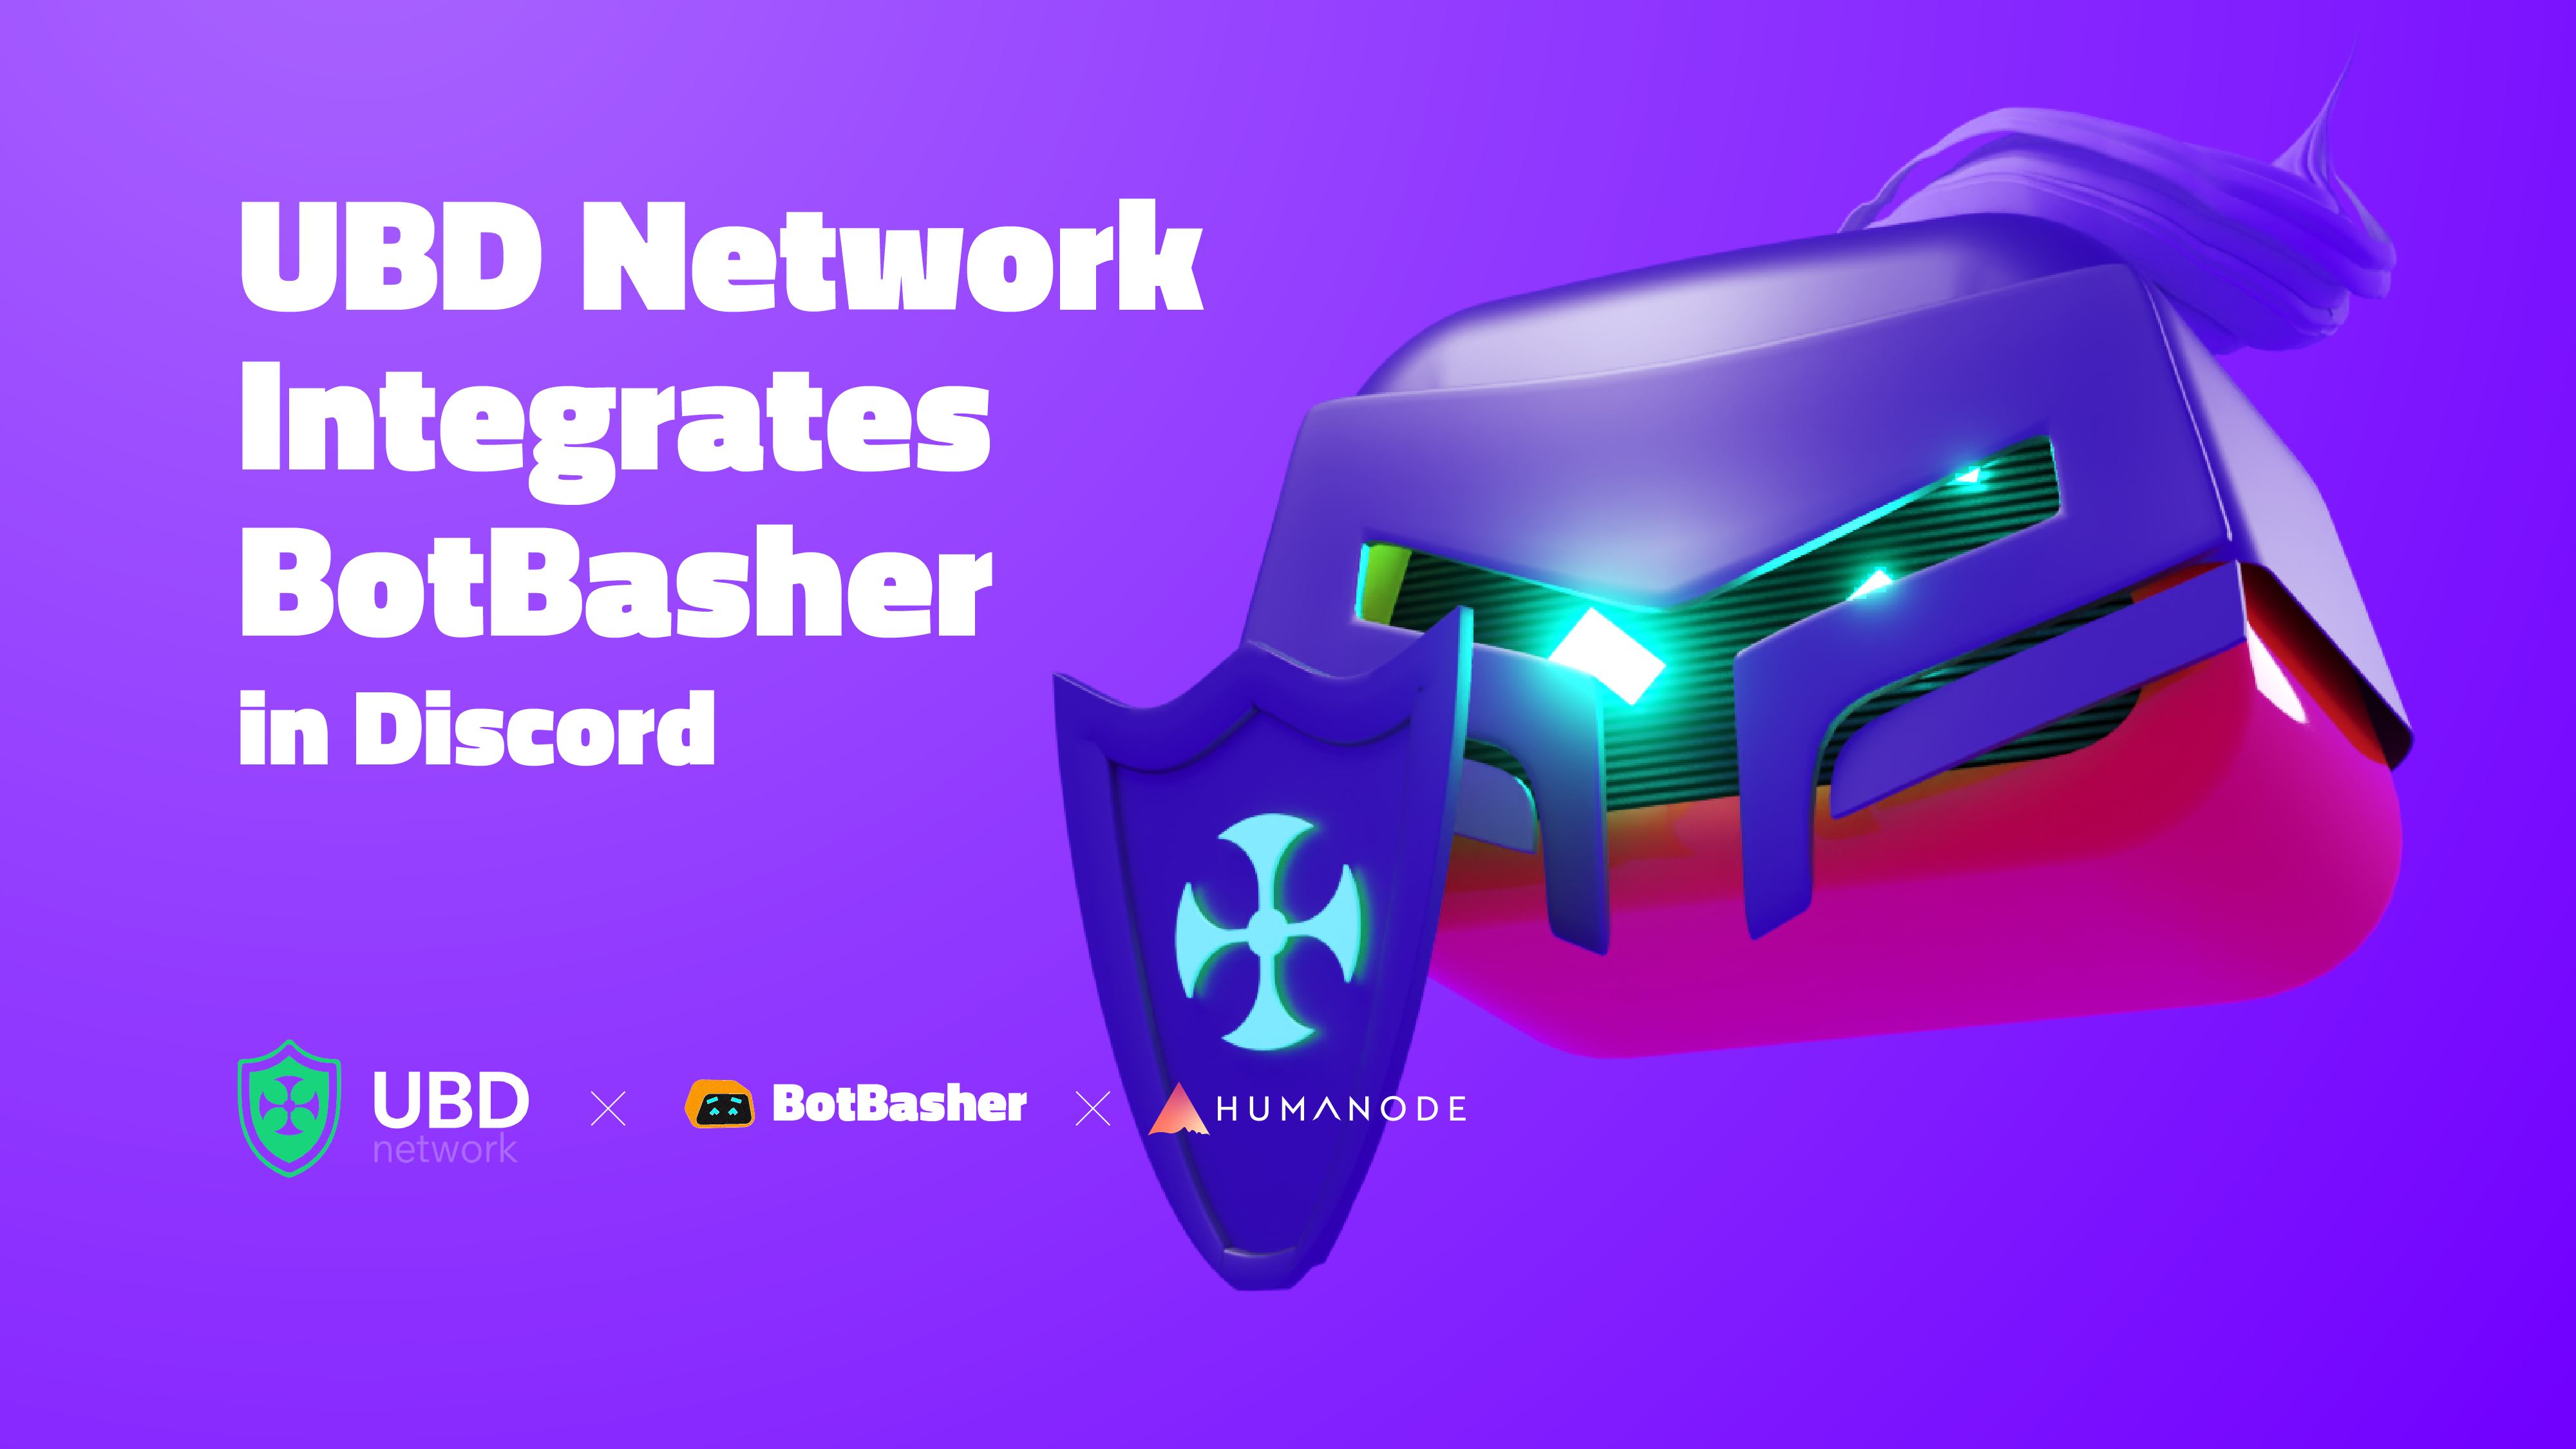 UBD Network integrates BotBasher into its Discord for Anti-sybil checks